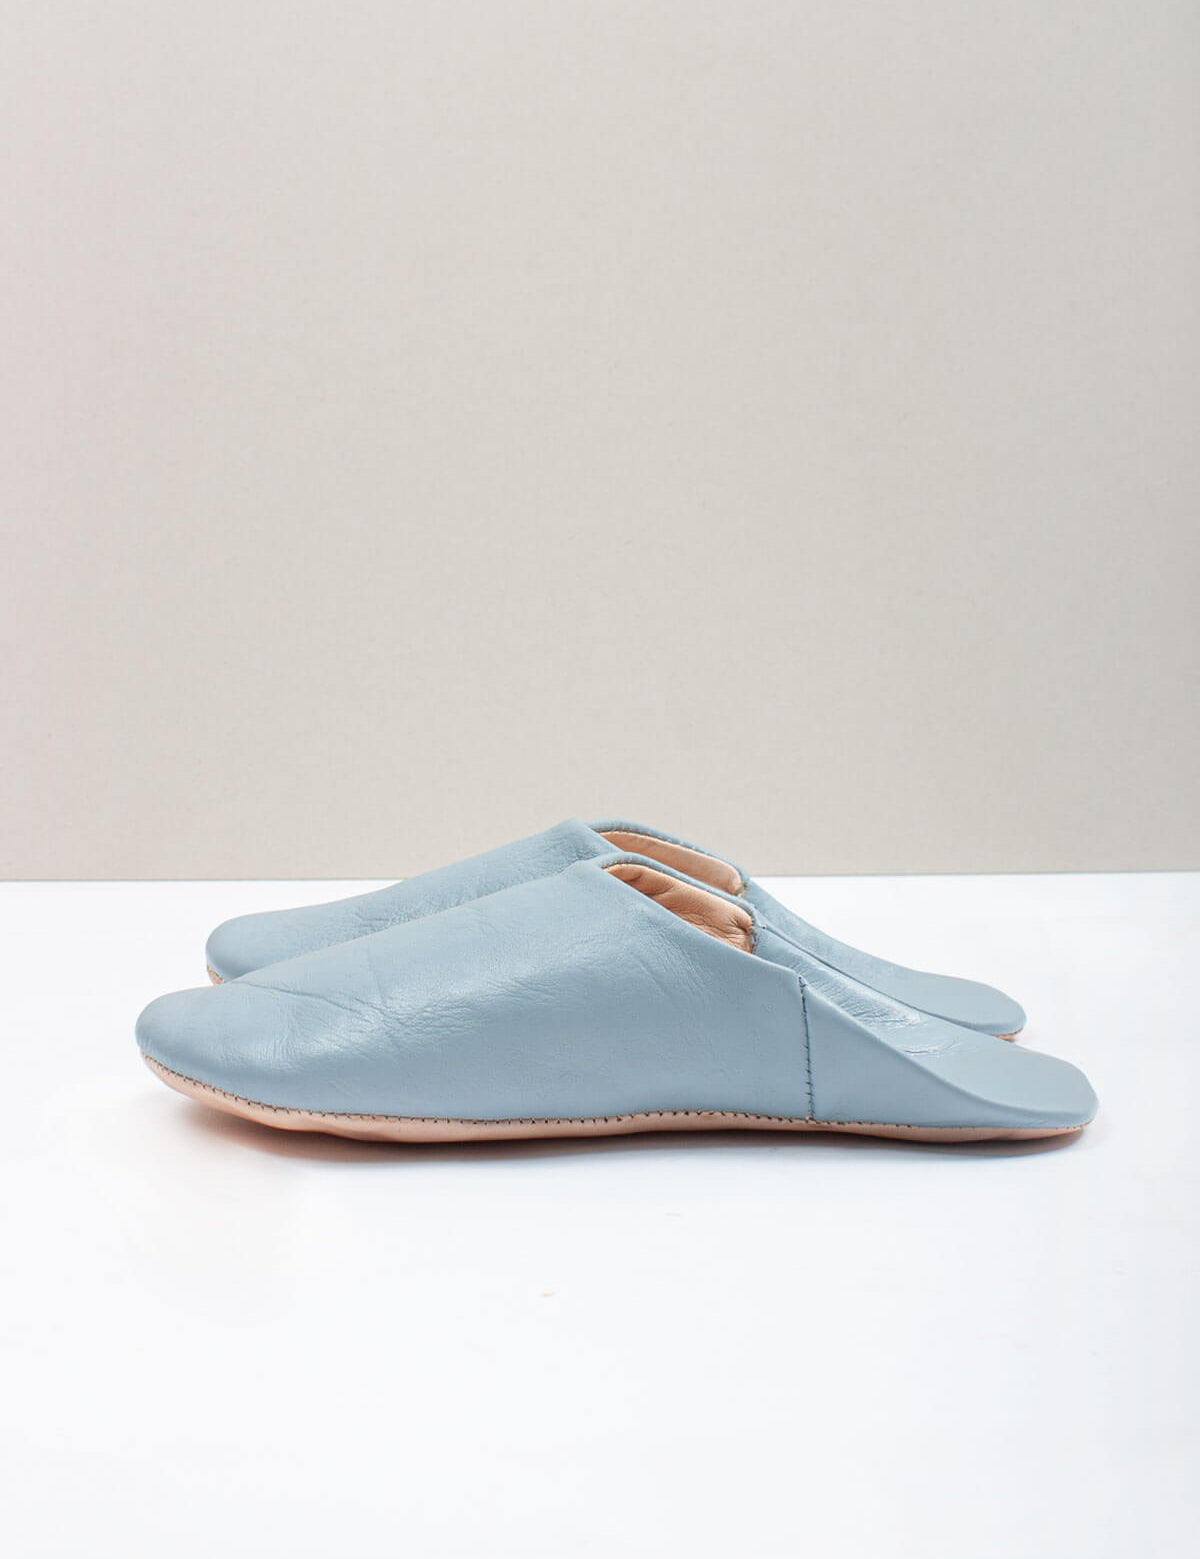 Bohemia-design-Moroccan-babcouche-slippers-pearl-grey-leather-slipon.jpg